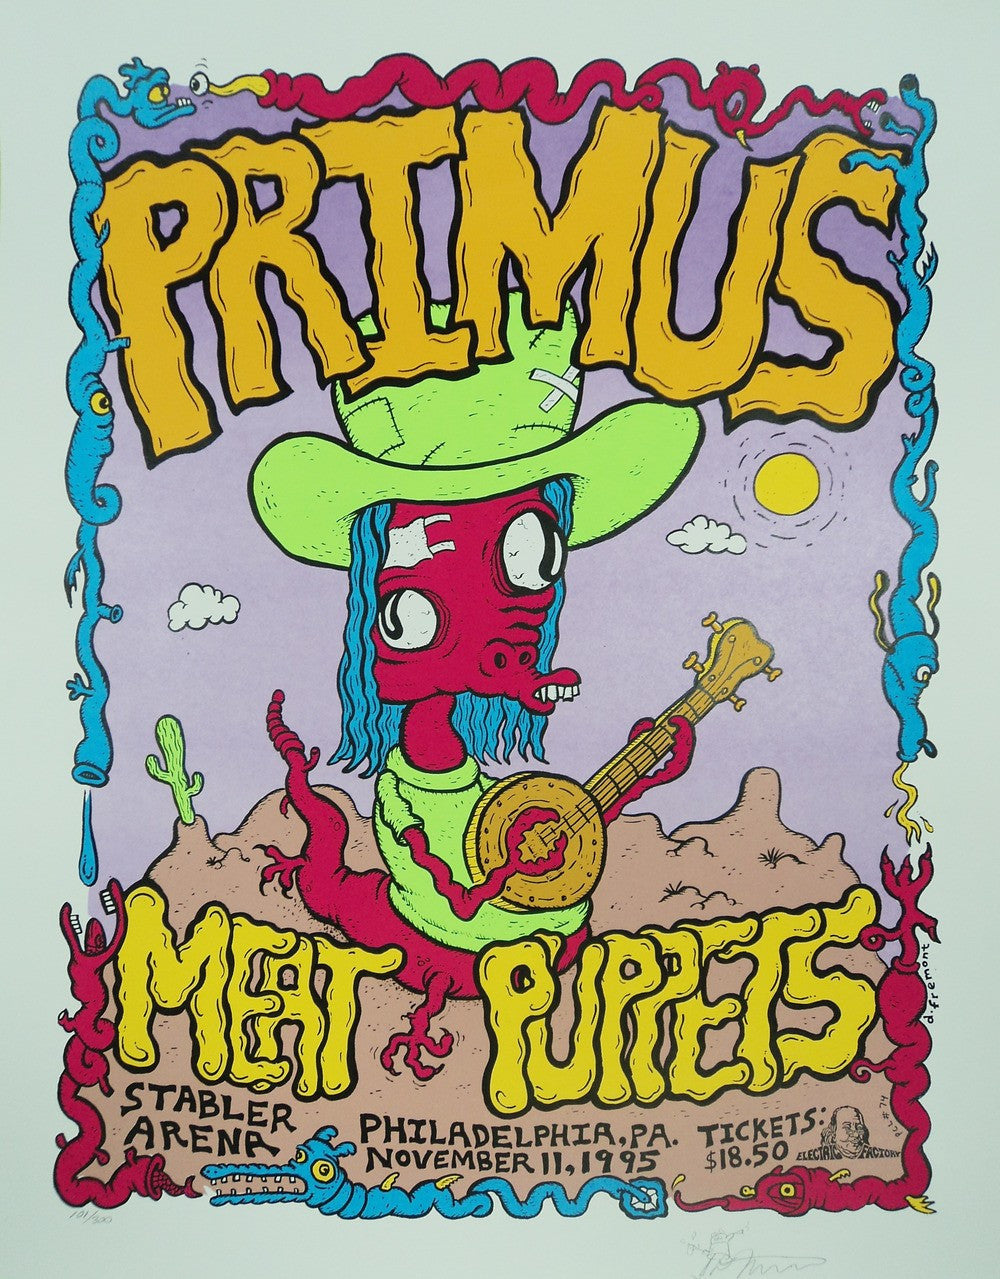 David Fremont - 1995 - Primus Concert Poster